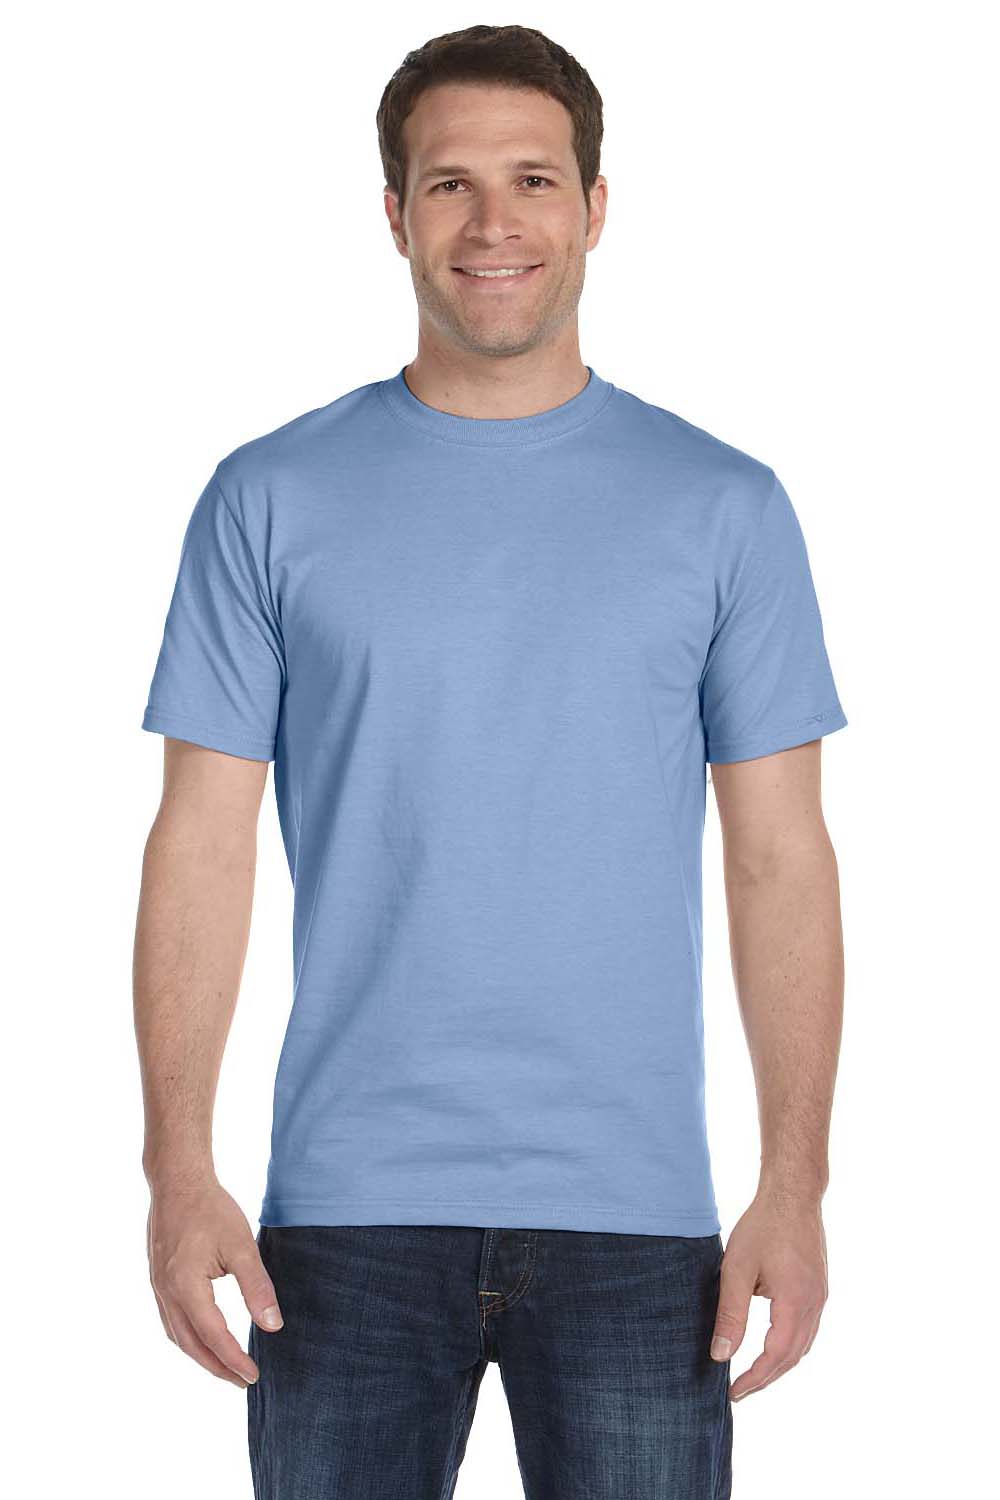 Hanes 5180 Mens Beefy-T Short Sleeve Crewneck T-Shirt Light Blue Front